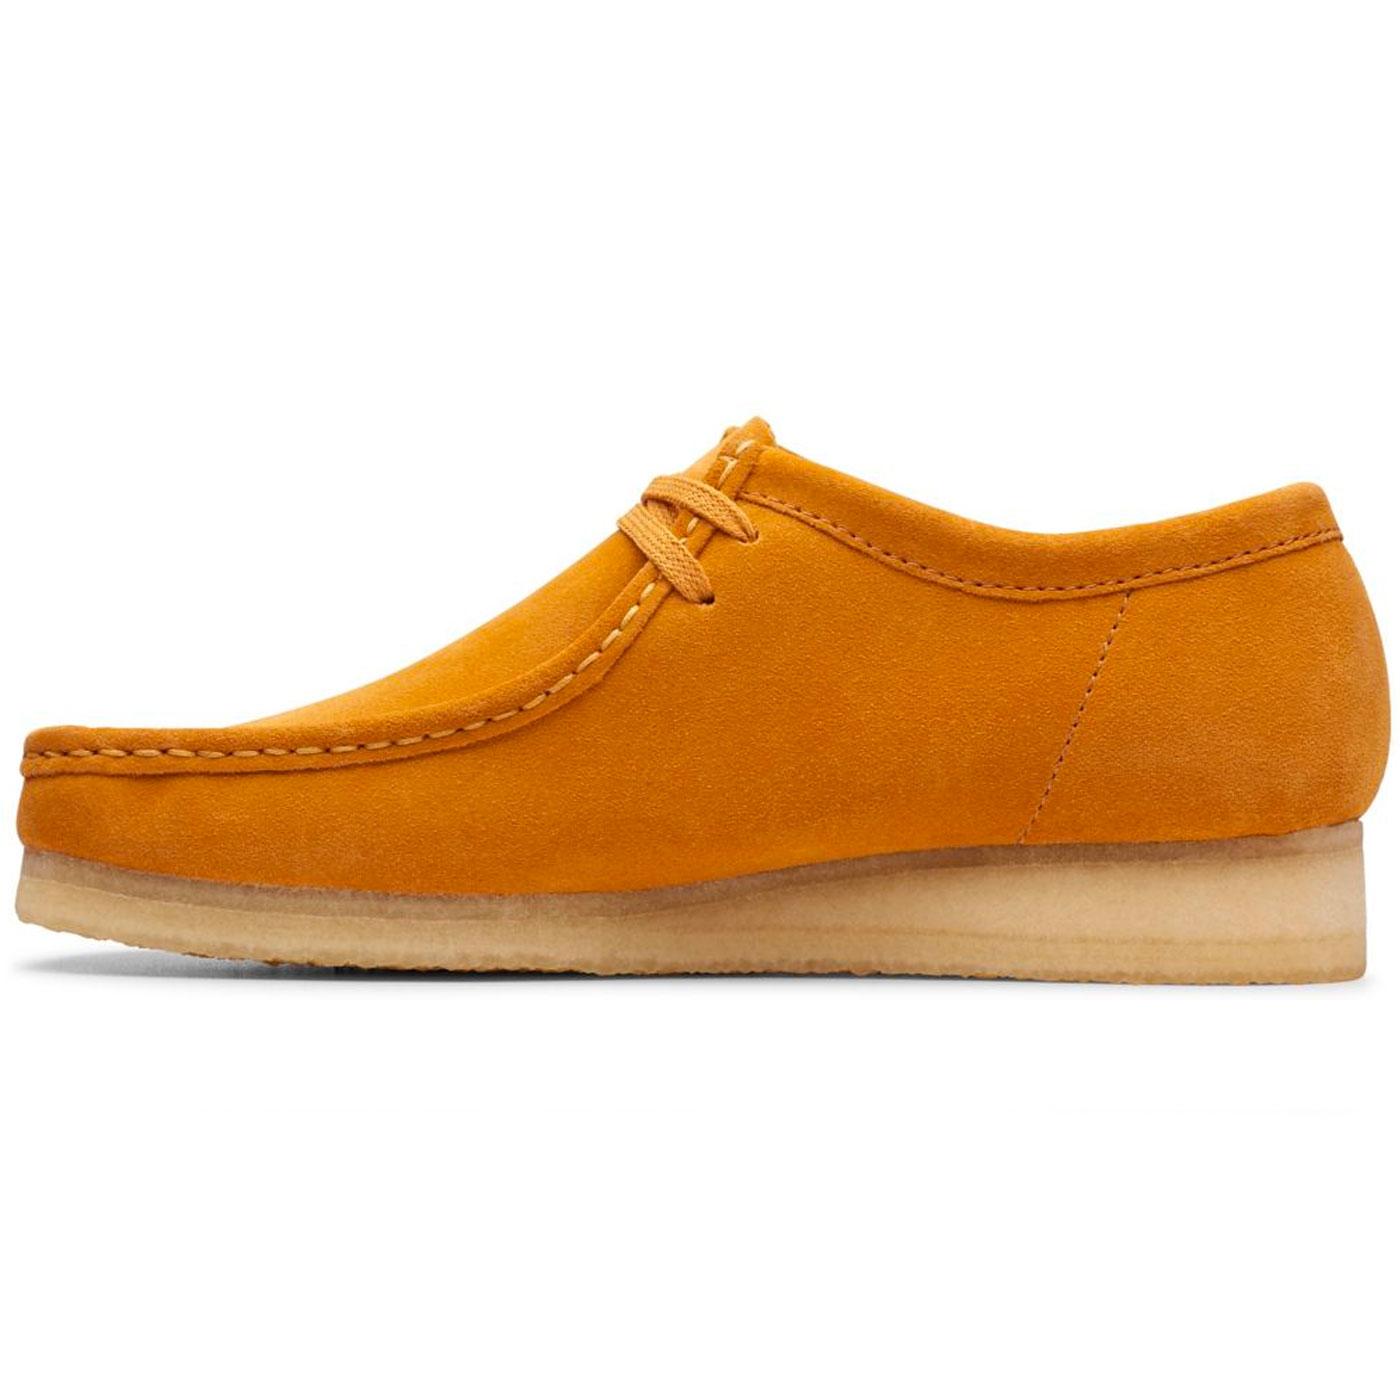 CLARKS ORIGINALS Wallabee Mod Moccasin Shoes Turmeric